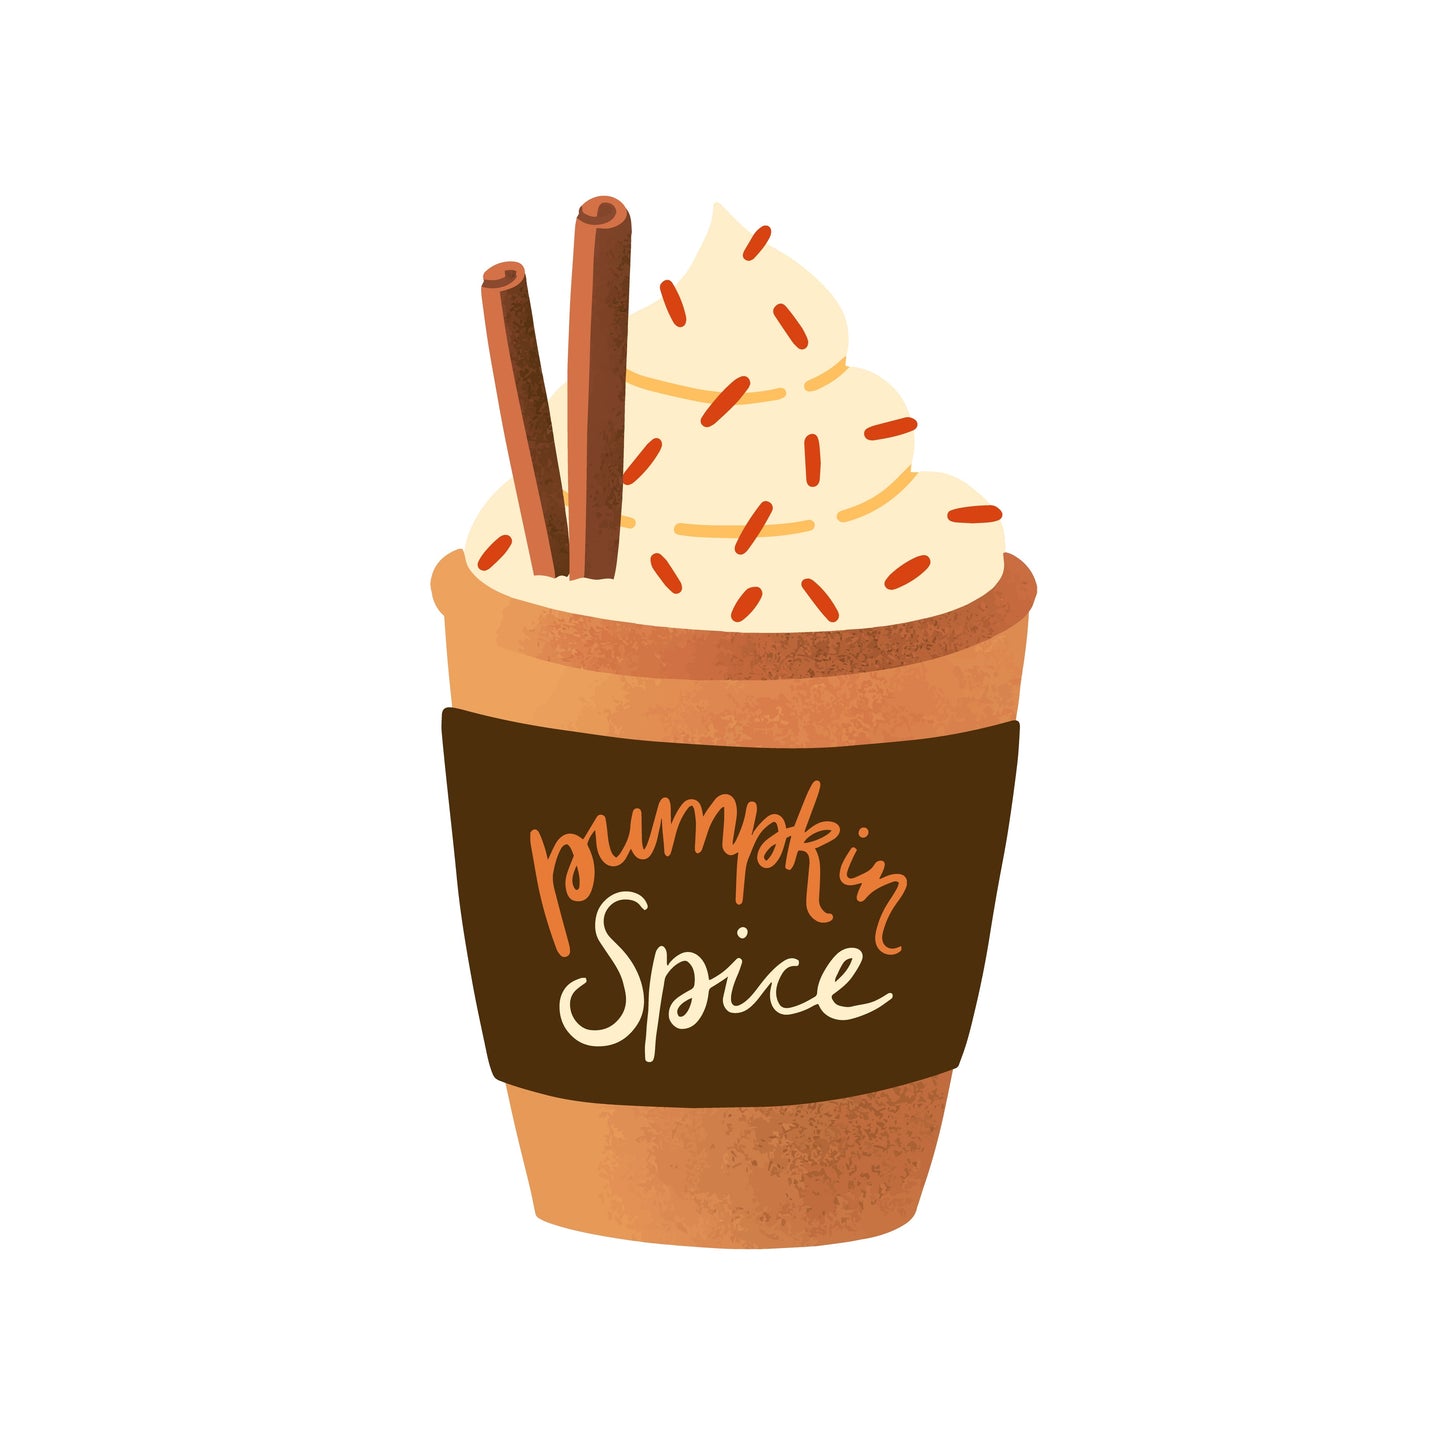 Pumpkin Pie Spice mix (Seasonal)